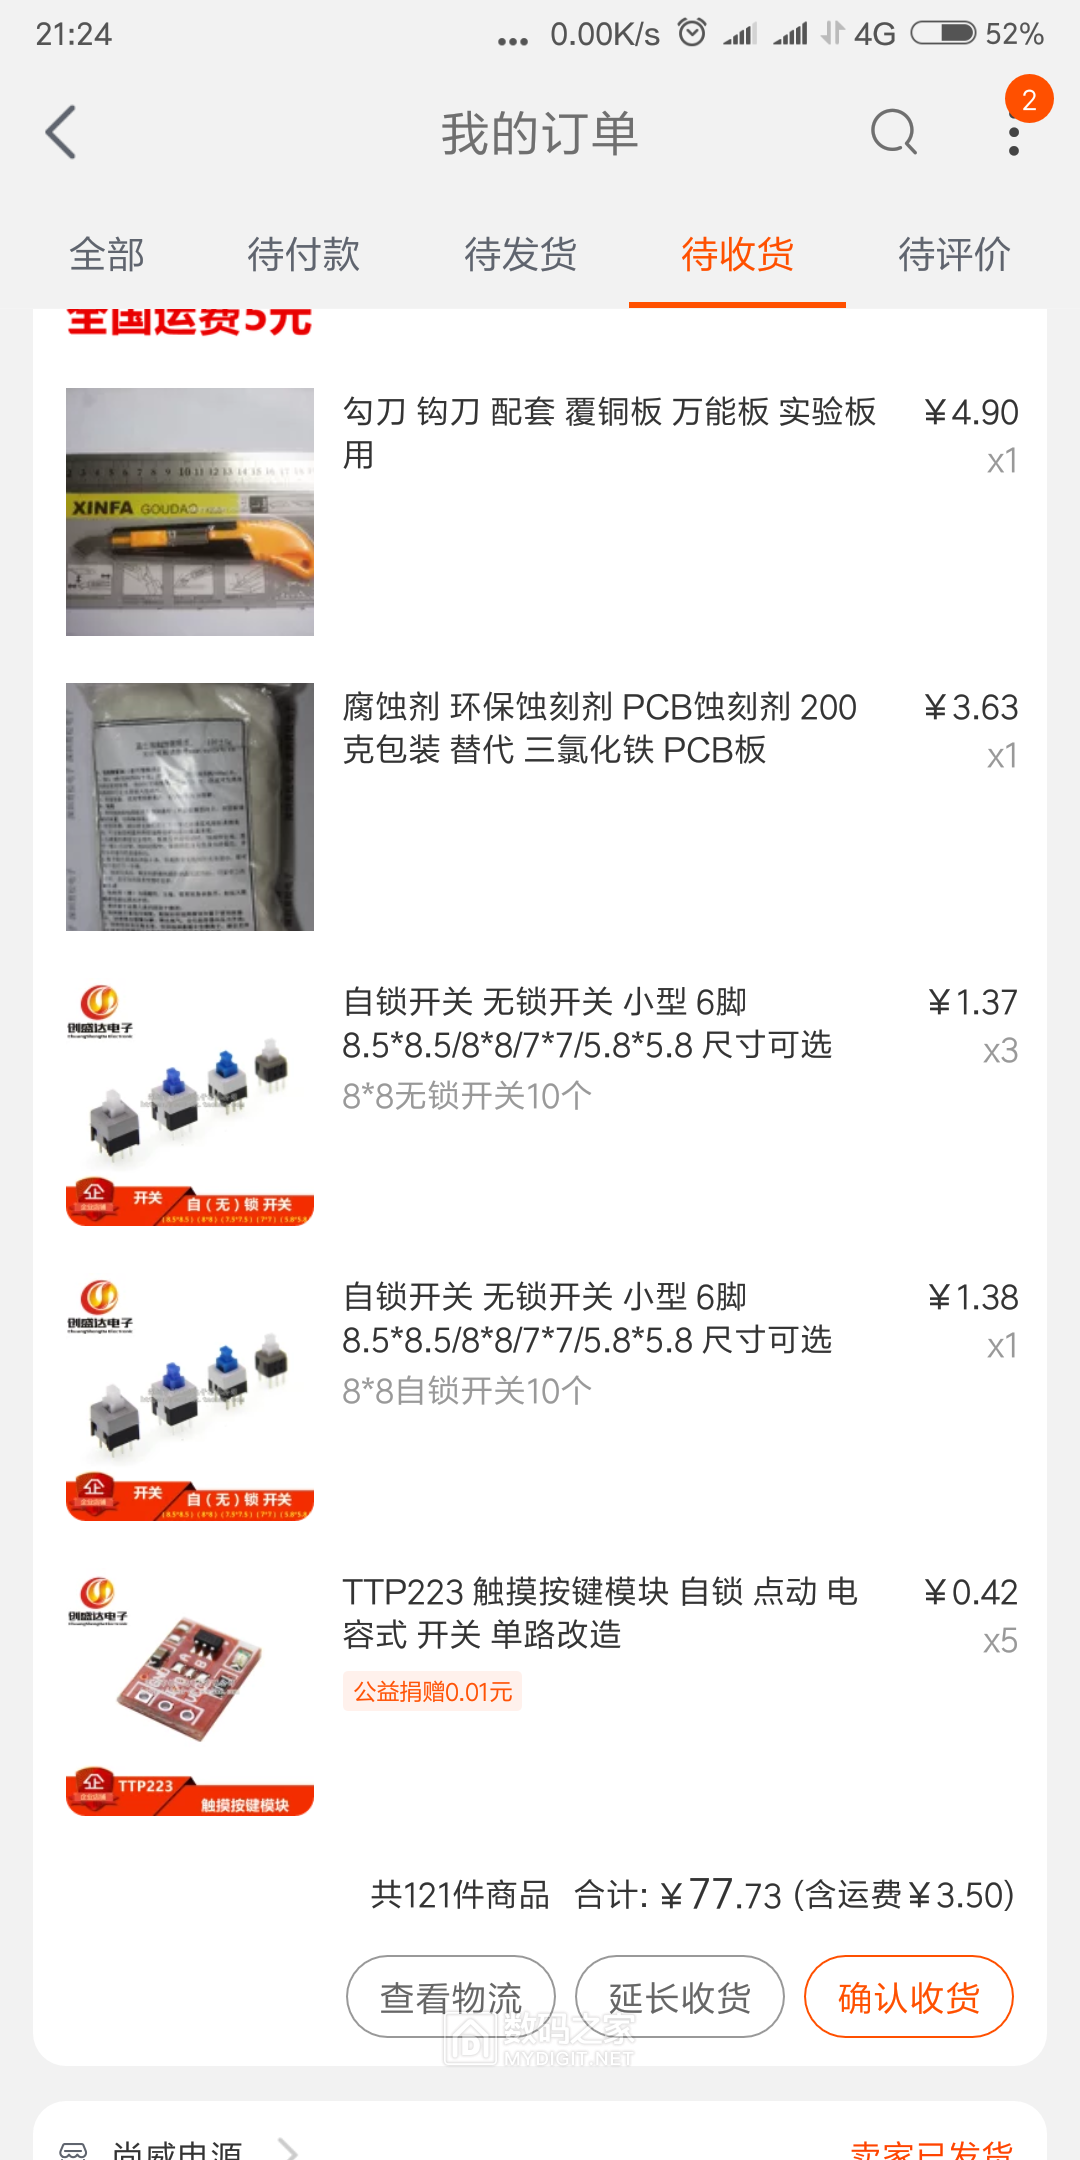 Screenshot_2019-03-23-21-24-09-342_com.taobao.taobao.png